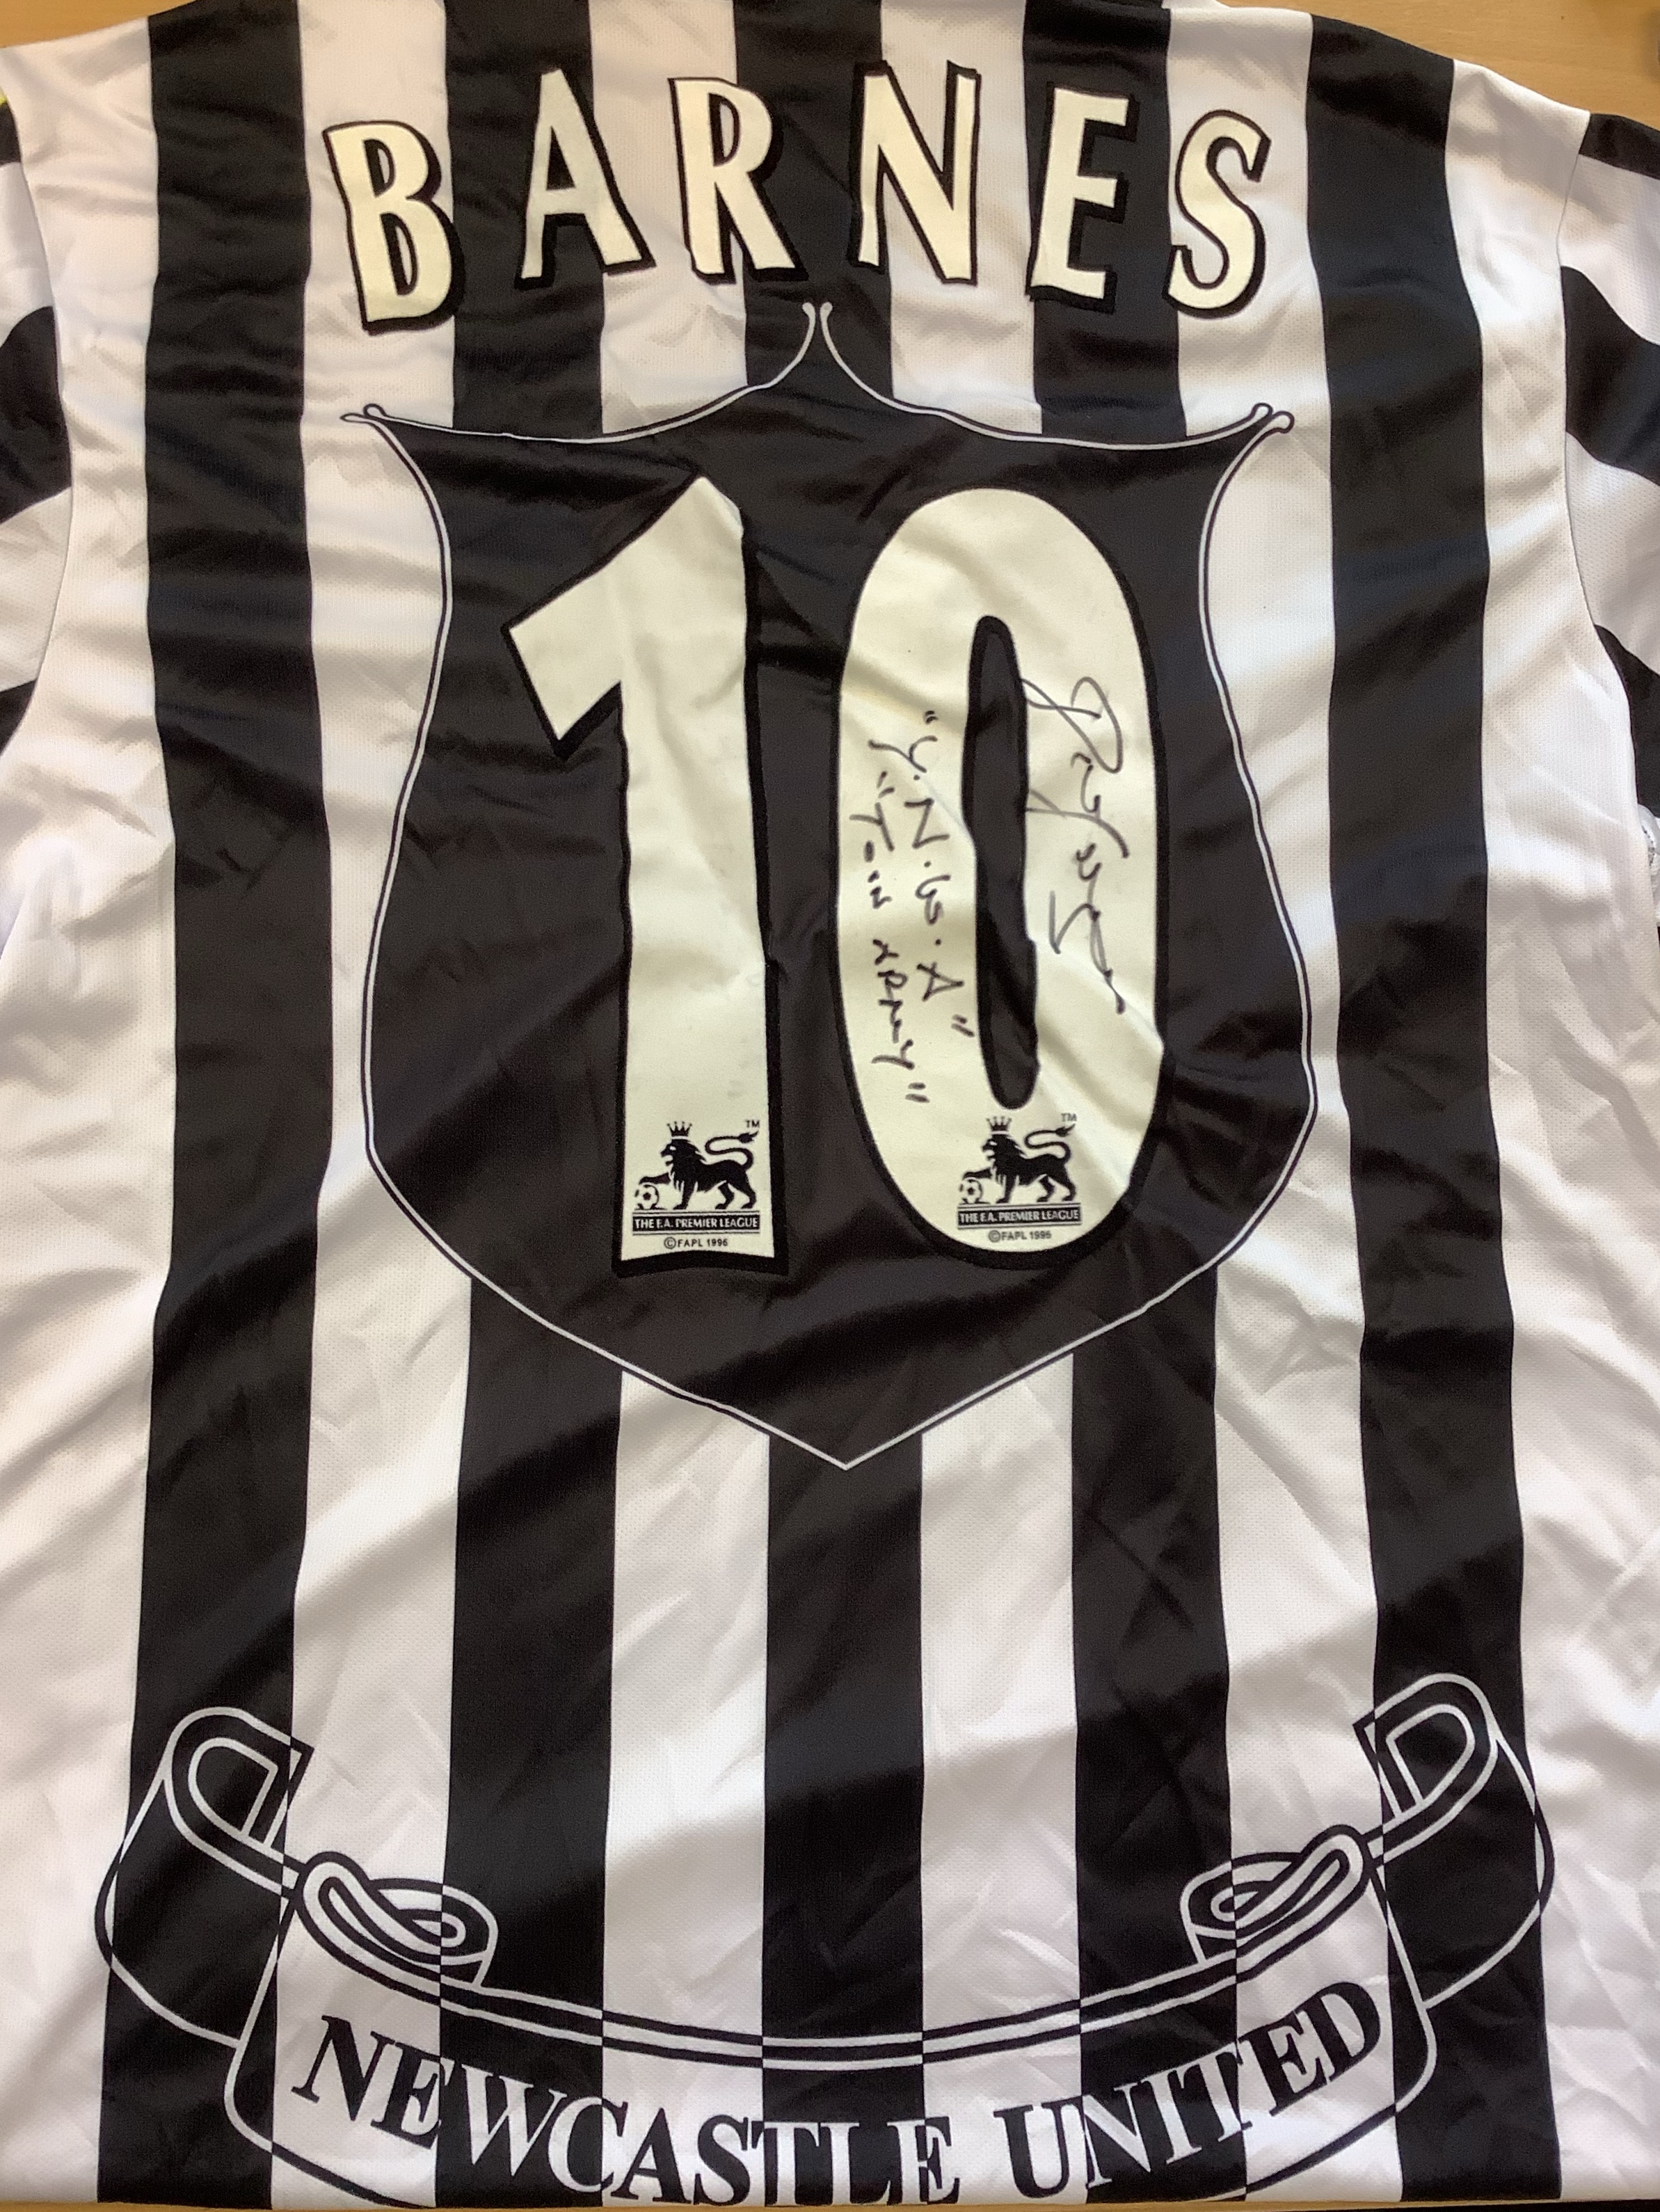 Newcastle United John Barnes Signed Replica Shirt - Image 3 of 3